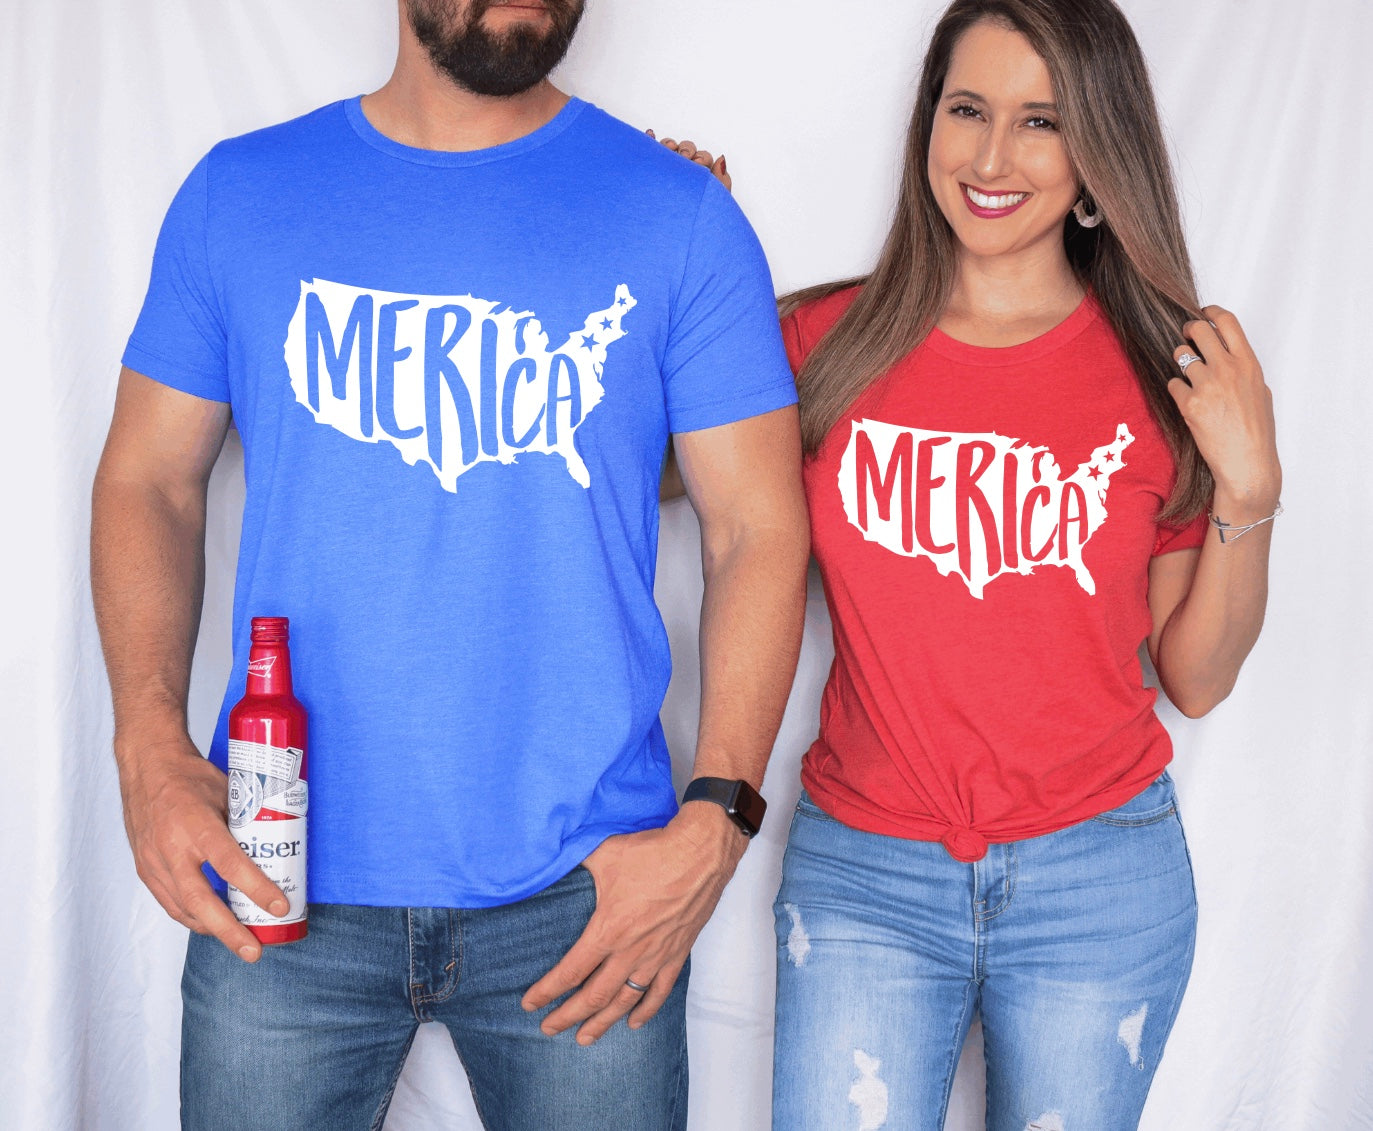 Merica t-shirts